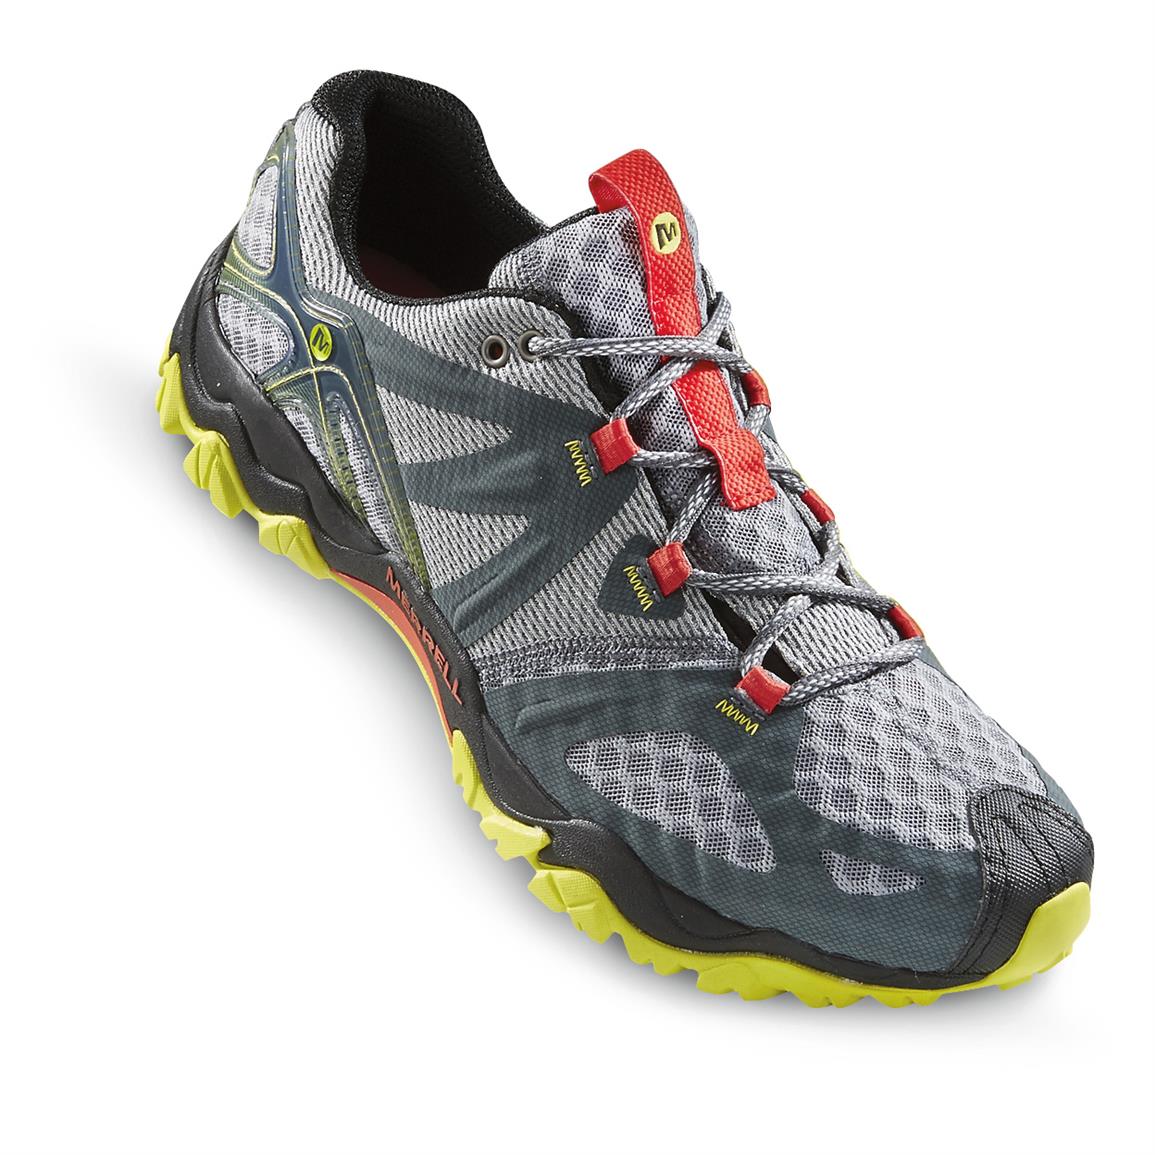 Merrell Men's Grassbow Air Hiking Shoes - 640112, Running Shoes